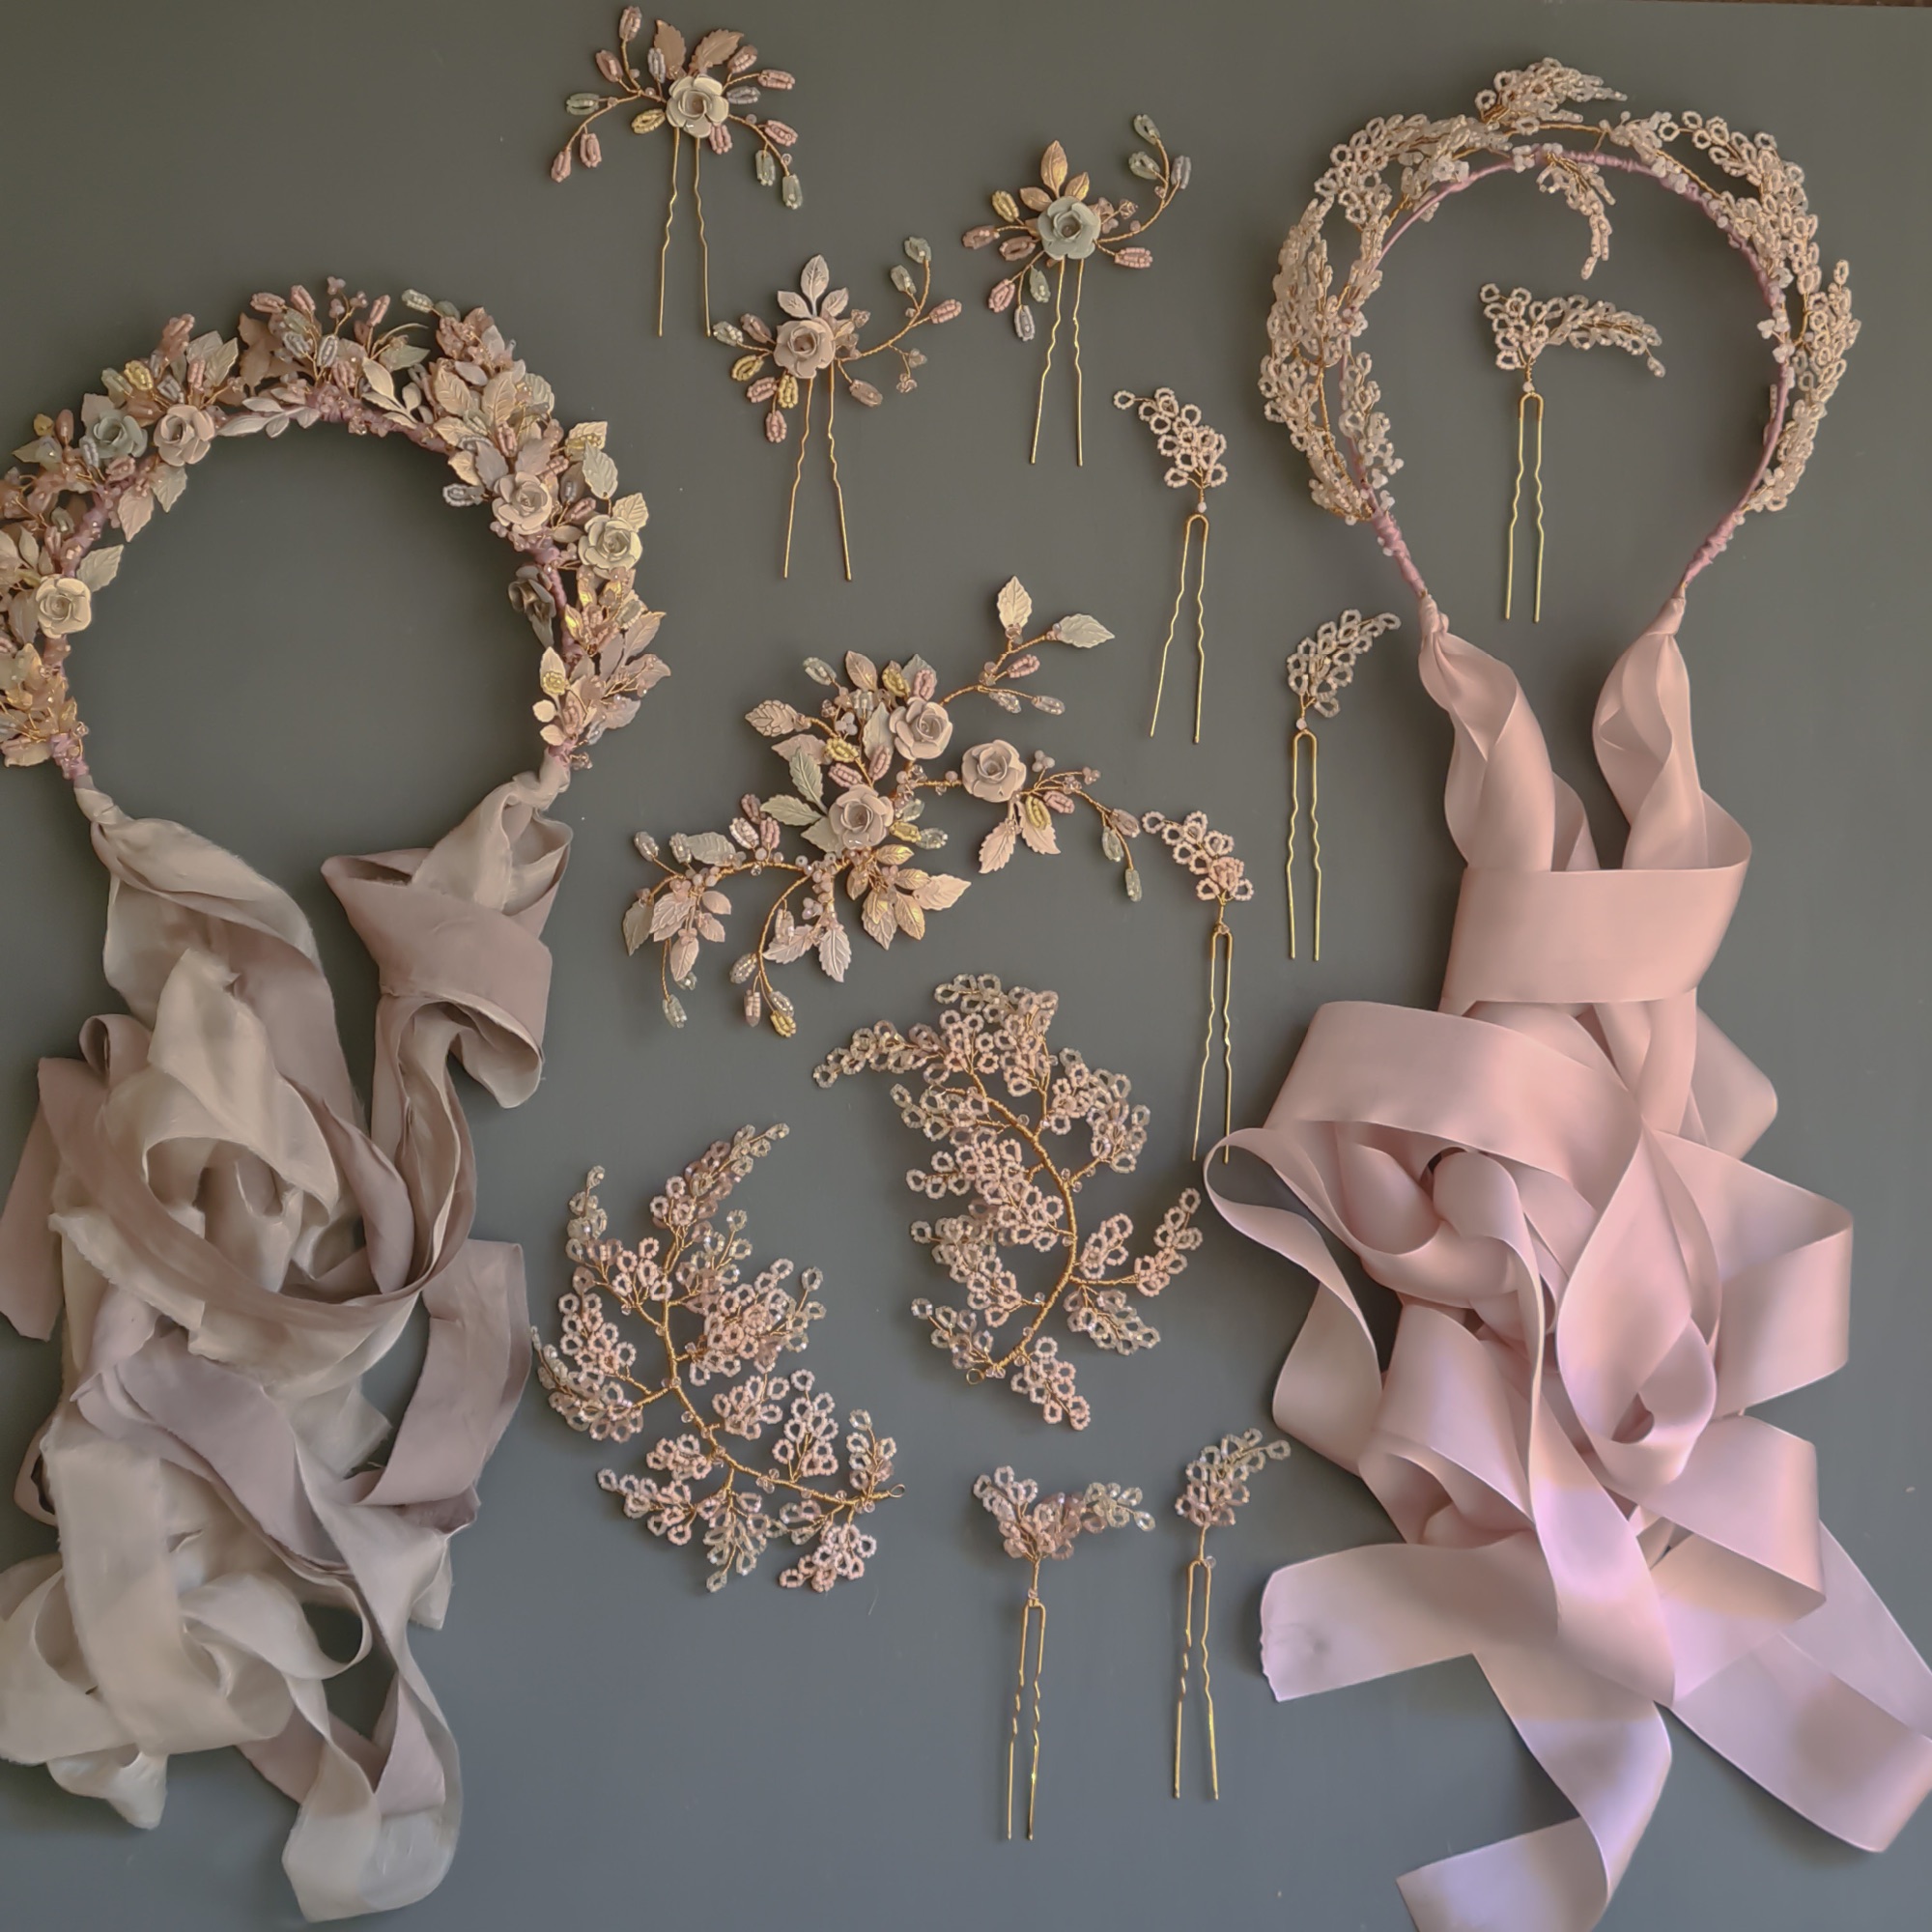 Handmade floral bridal crowns by Clare Lloyd